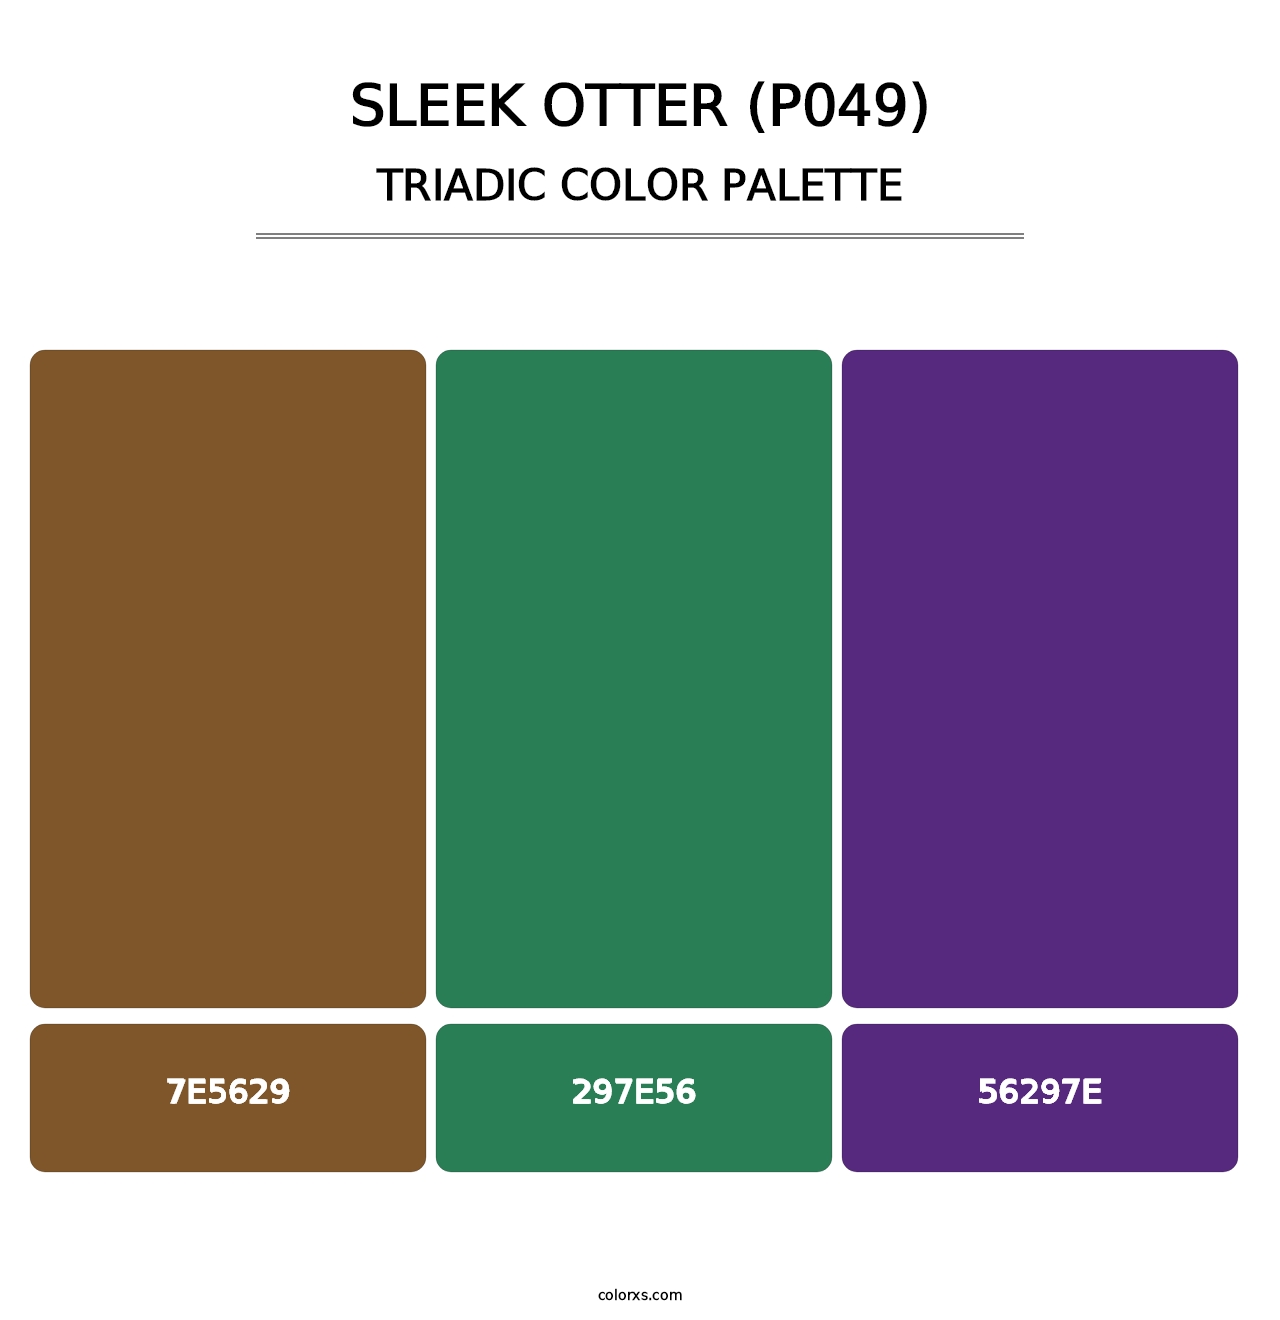 Sleek Otter (P049) - Triadic Color Palette